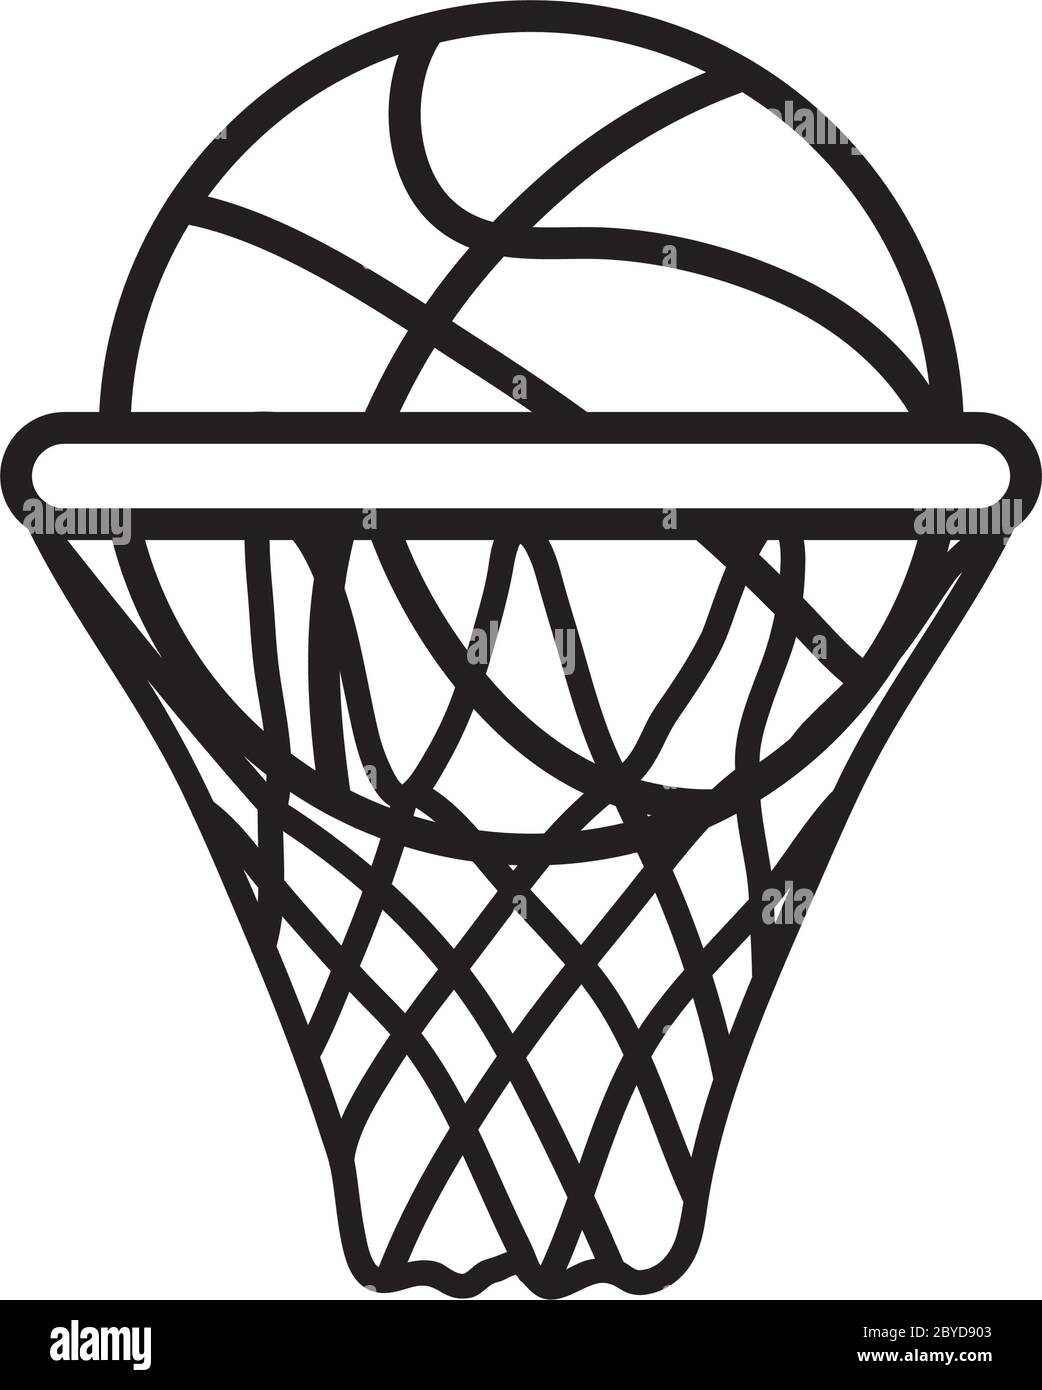 Basketballkorb mit Ball-Symbol auf weißem Hintergrund, Linienstil,  Vektor-Illustration Stock-Vektorgrafik - Alamy